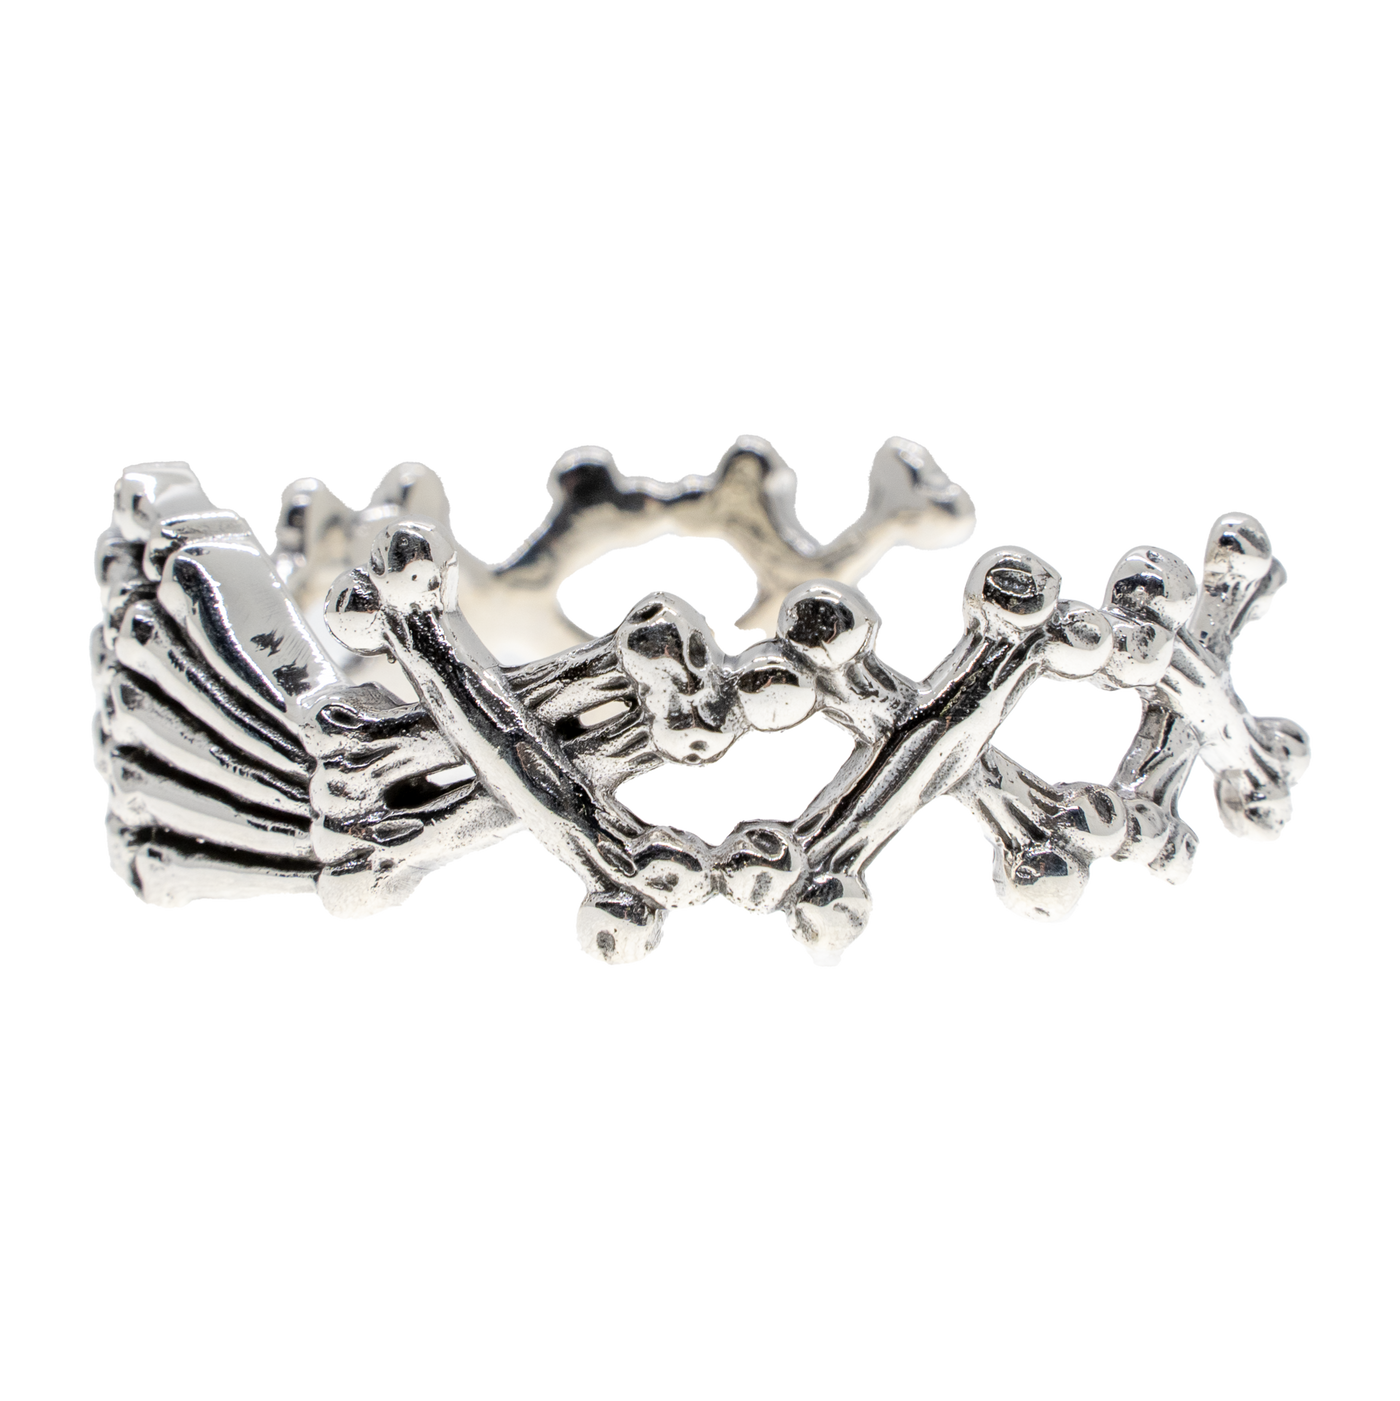 Skeleton Hand with cross bones Bangle - .925 sterling silver